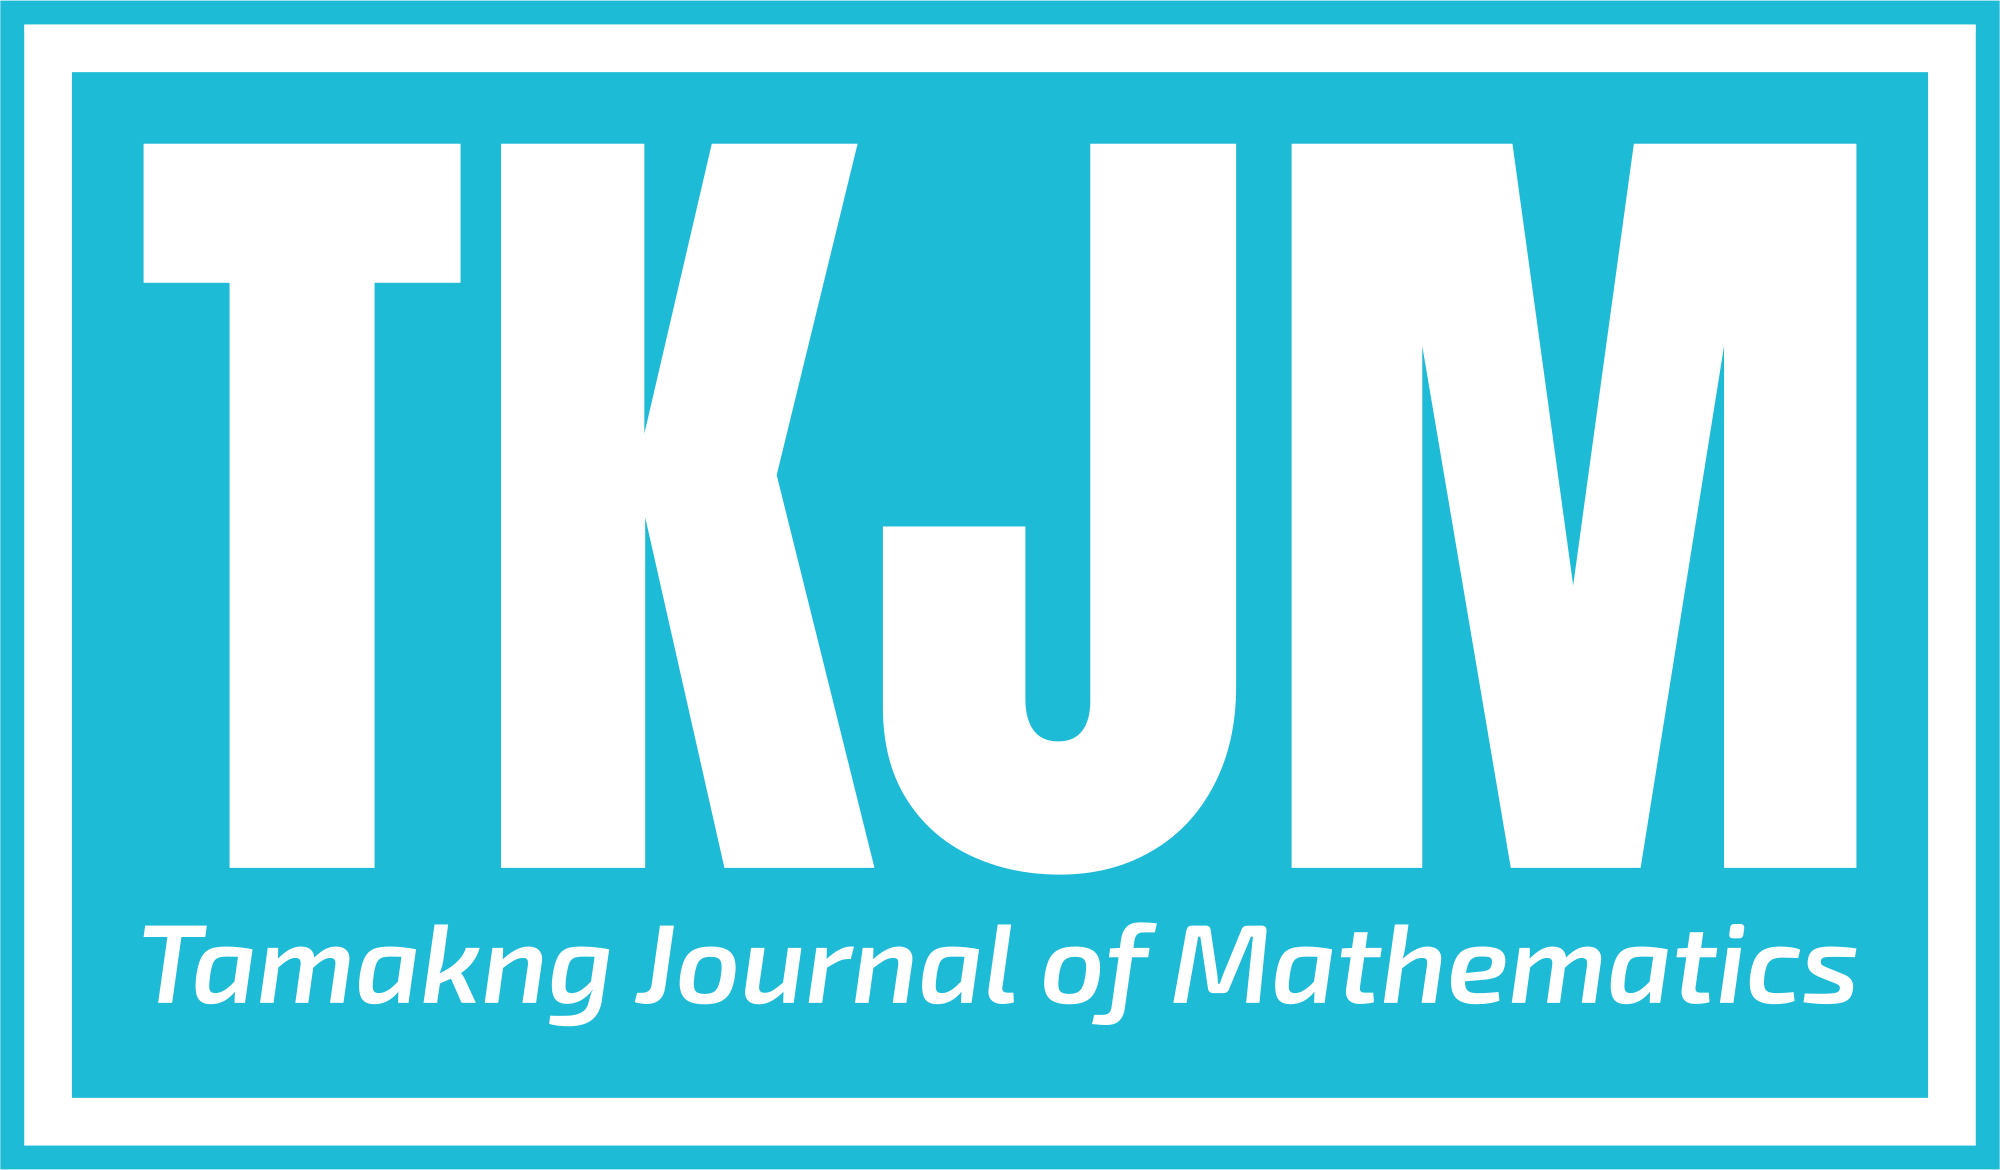 Welcome to Tamkang  Journal of  Mathematics